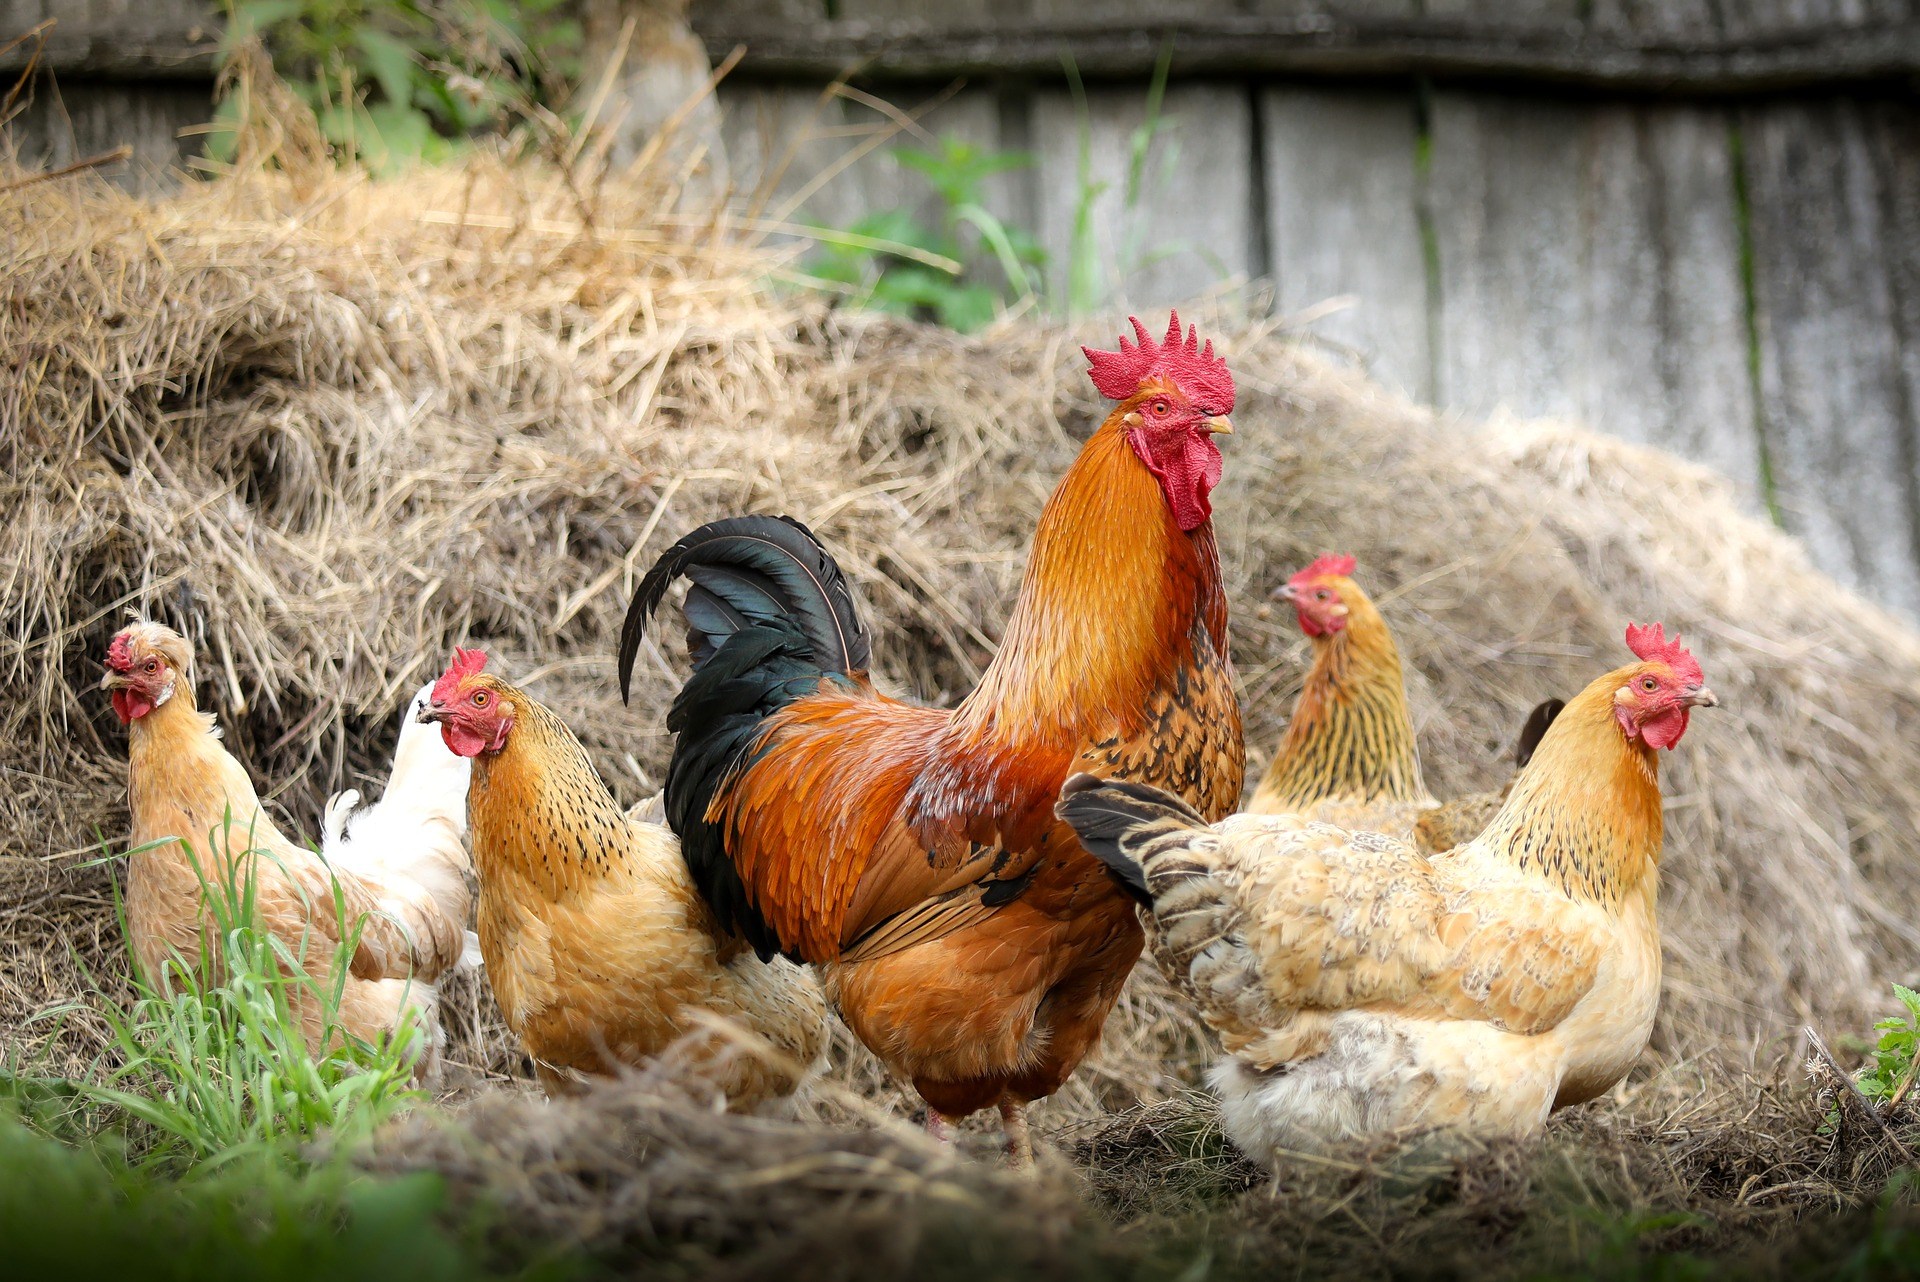 Poultry farming in Scotland